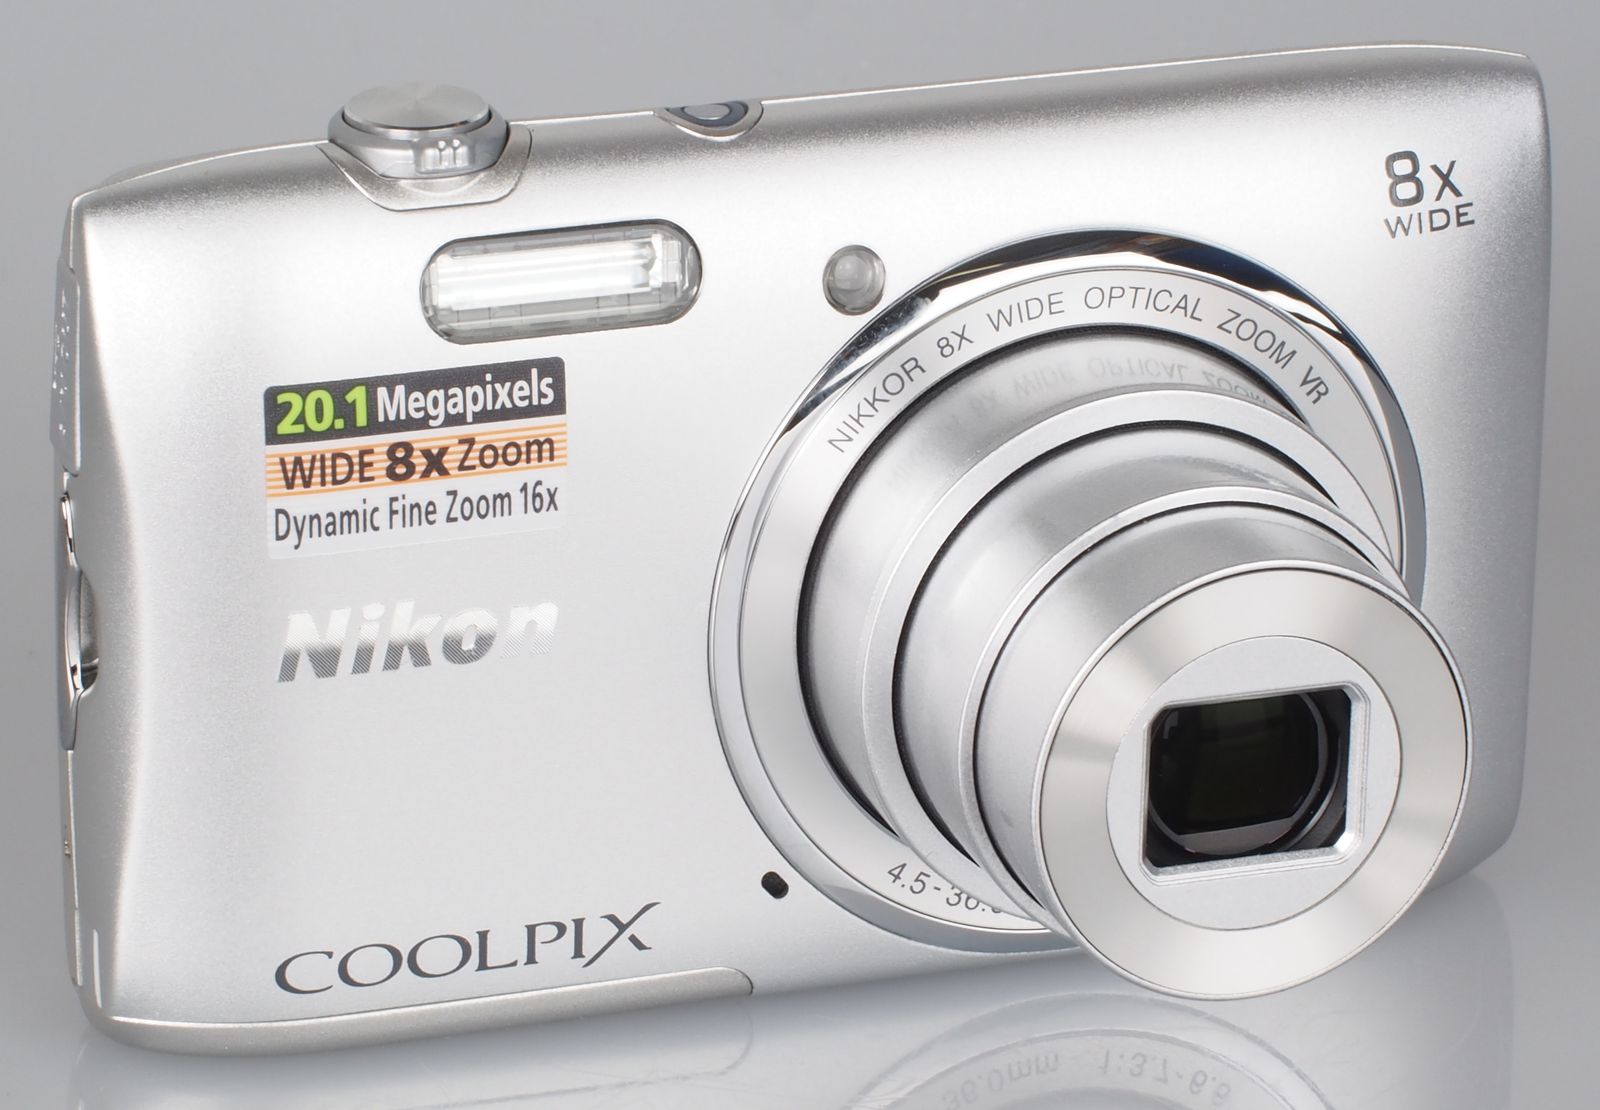 Nikon Coolpix S3600 Review